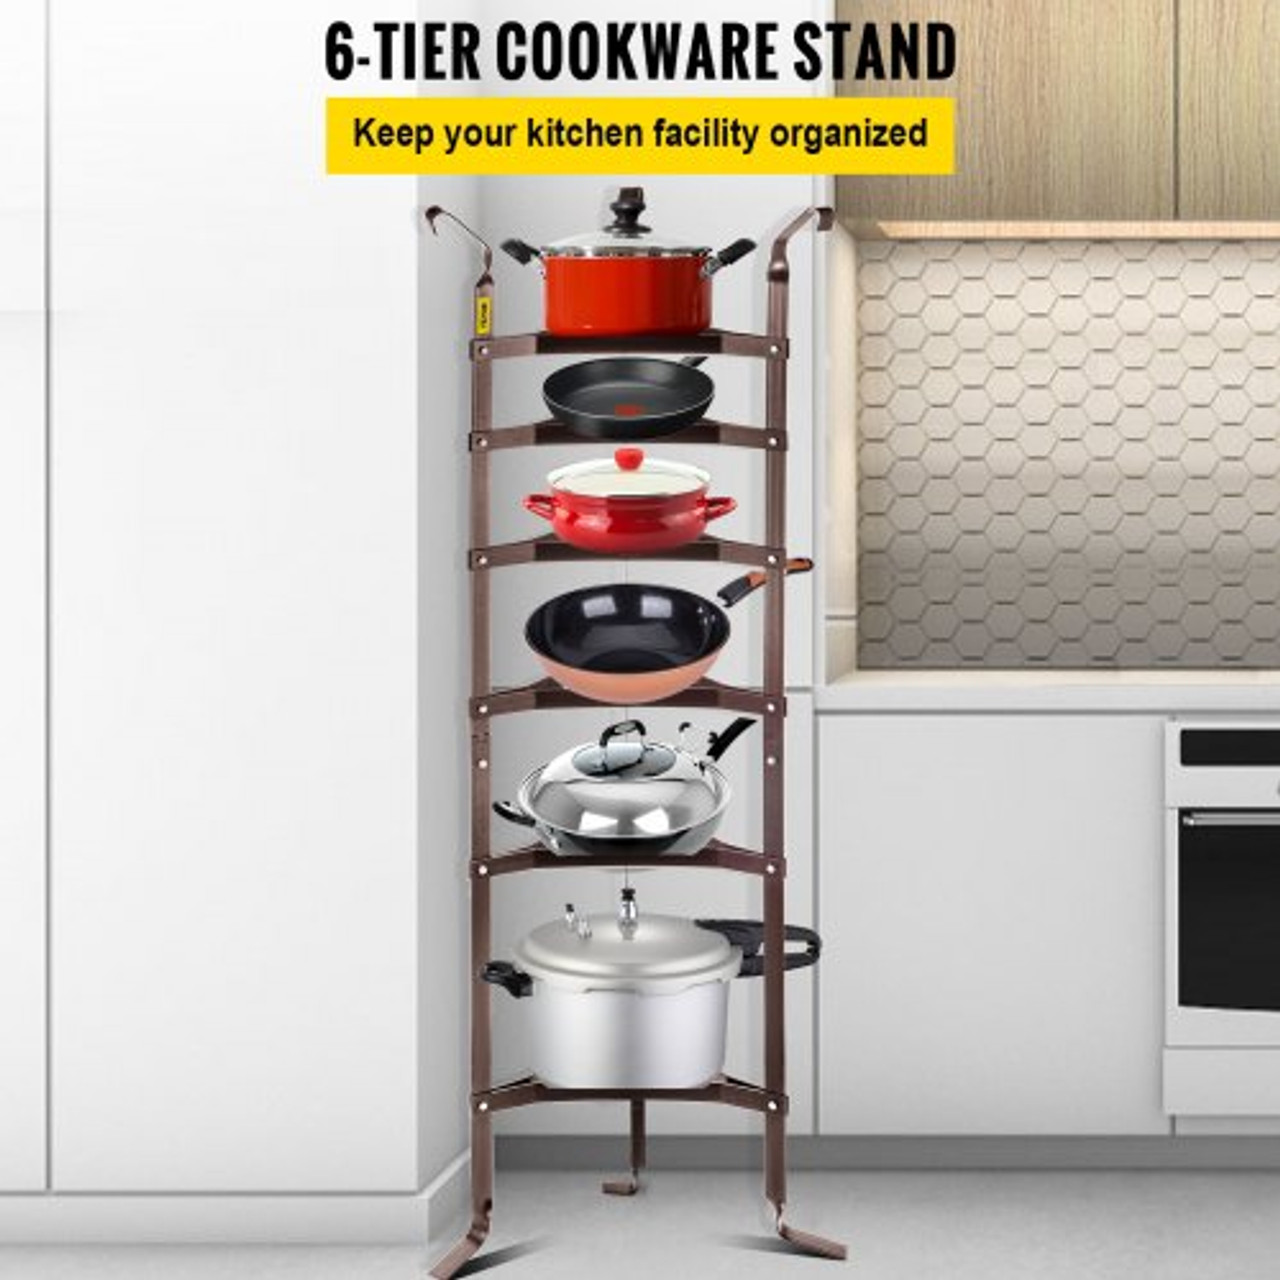 6-Tier Cookware Stand, Carbon Steel Multi-Layer Pot Rack, 61-inch Cookware Shelf, Bronze Cookware Storage Tower, Unassembled Kitchen Corner Shelf Rack for Pans, Pots, Baskets and Kettles Storage